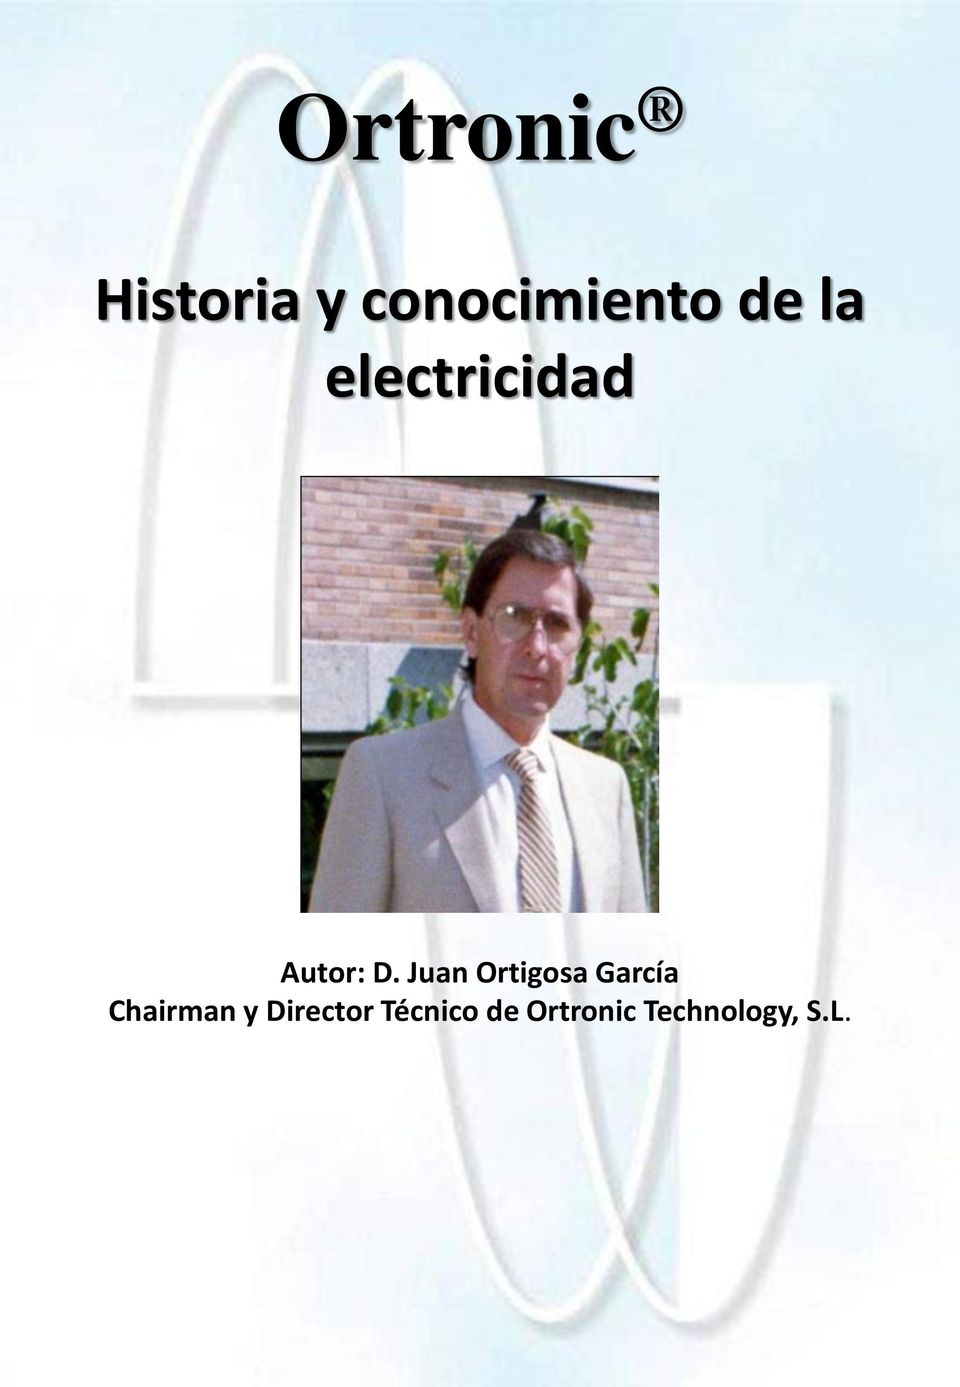 Juan Ortigosa García Chairman y